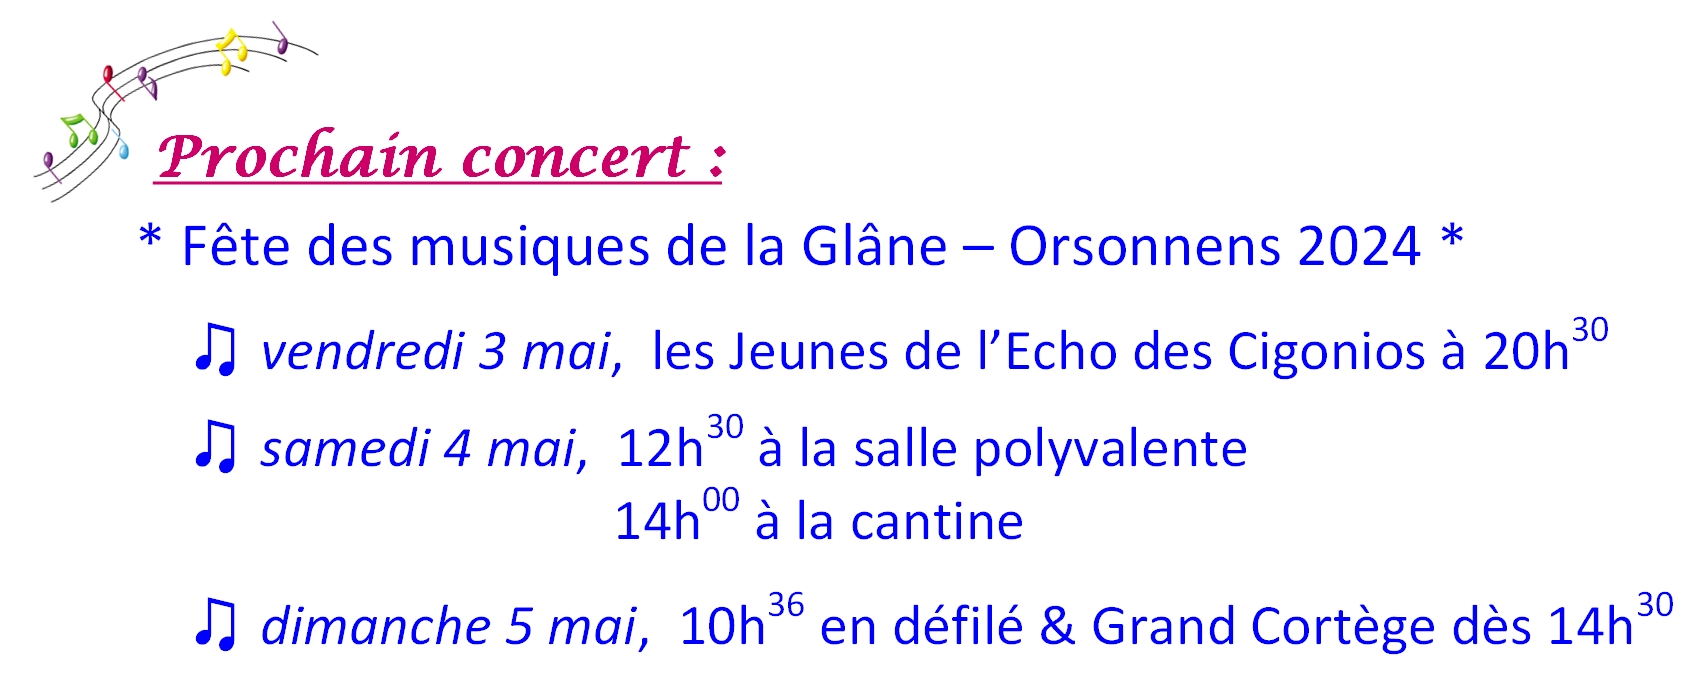 annonce_proch_concert_Giron_Orsonnens24